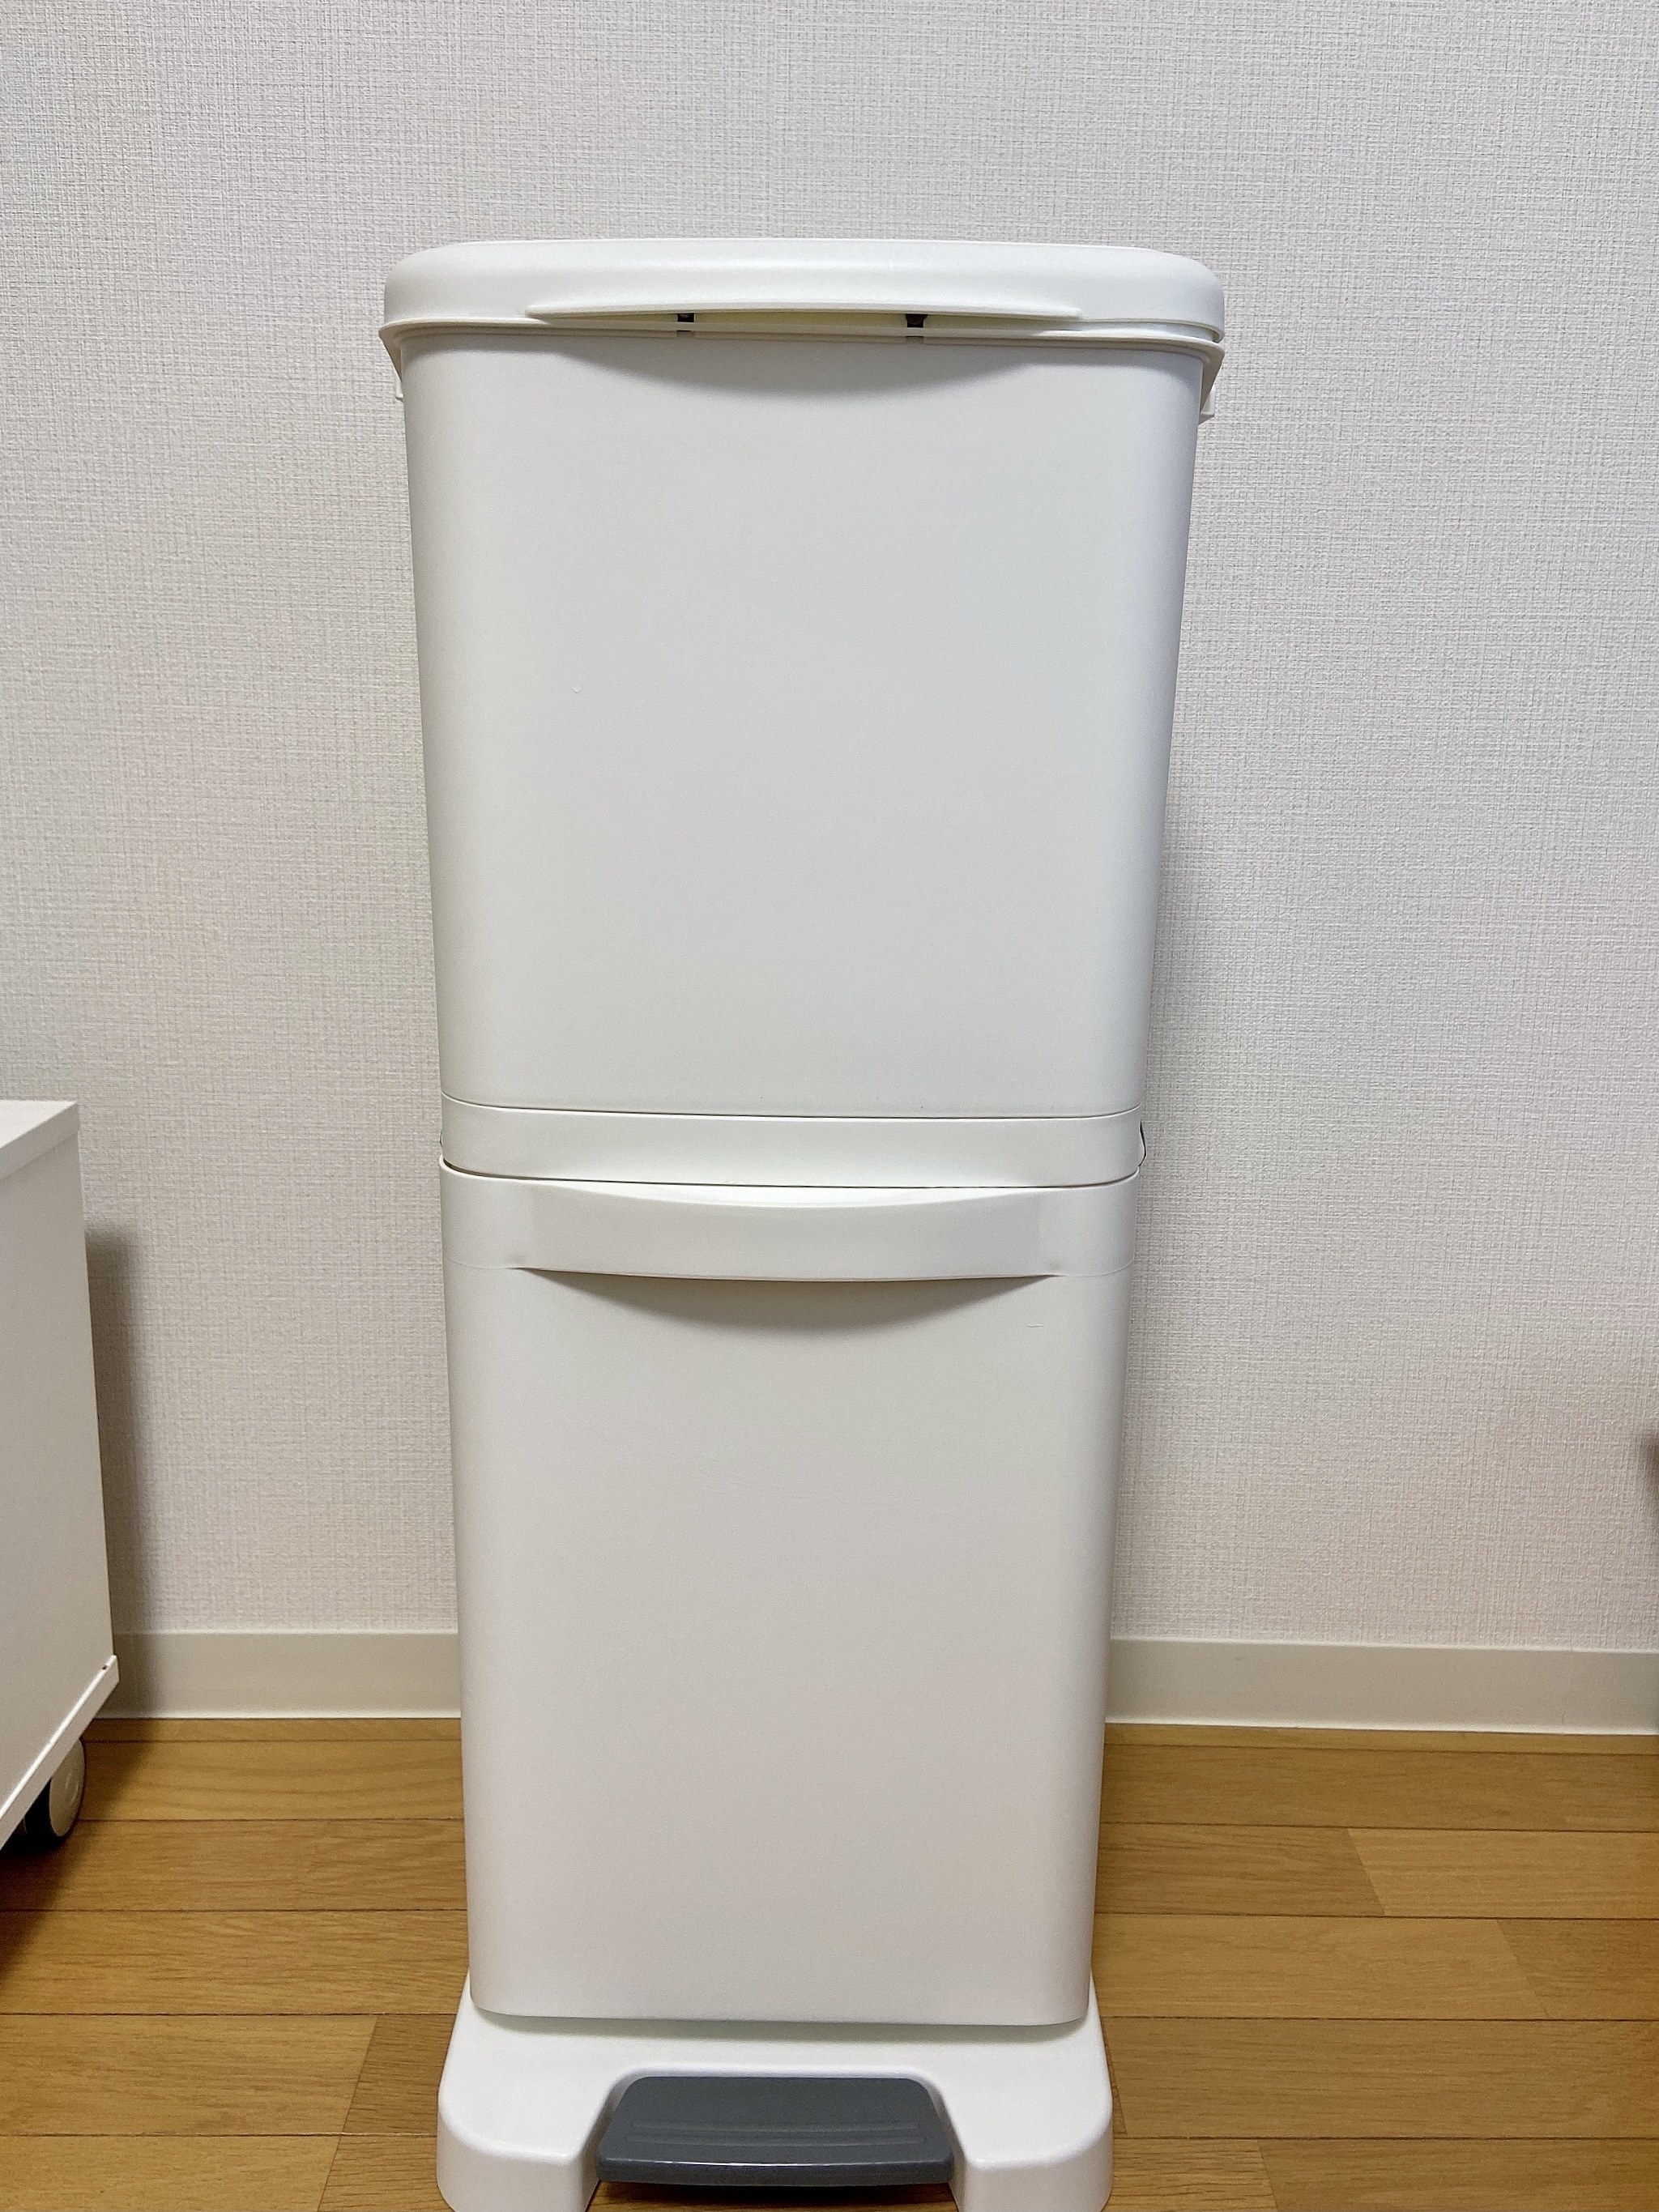 IKEA（イケア）のおすすめ便利アイテム「GÖRBRA ヨーブラ ペダル式ゴミ箱」